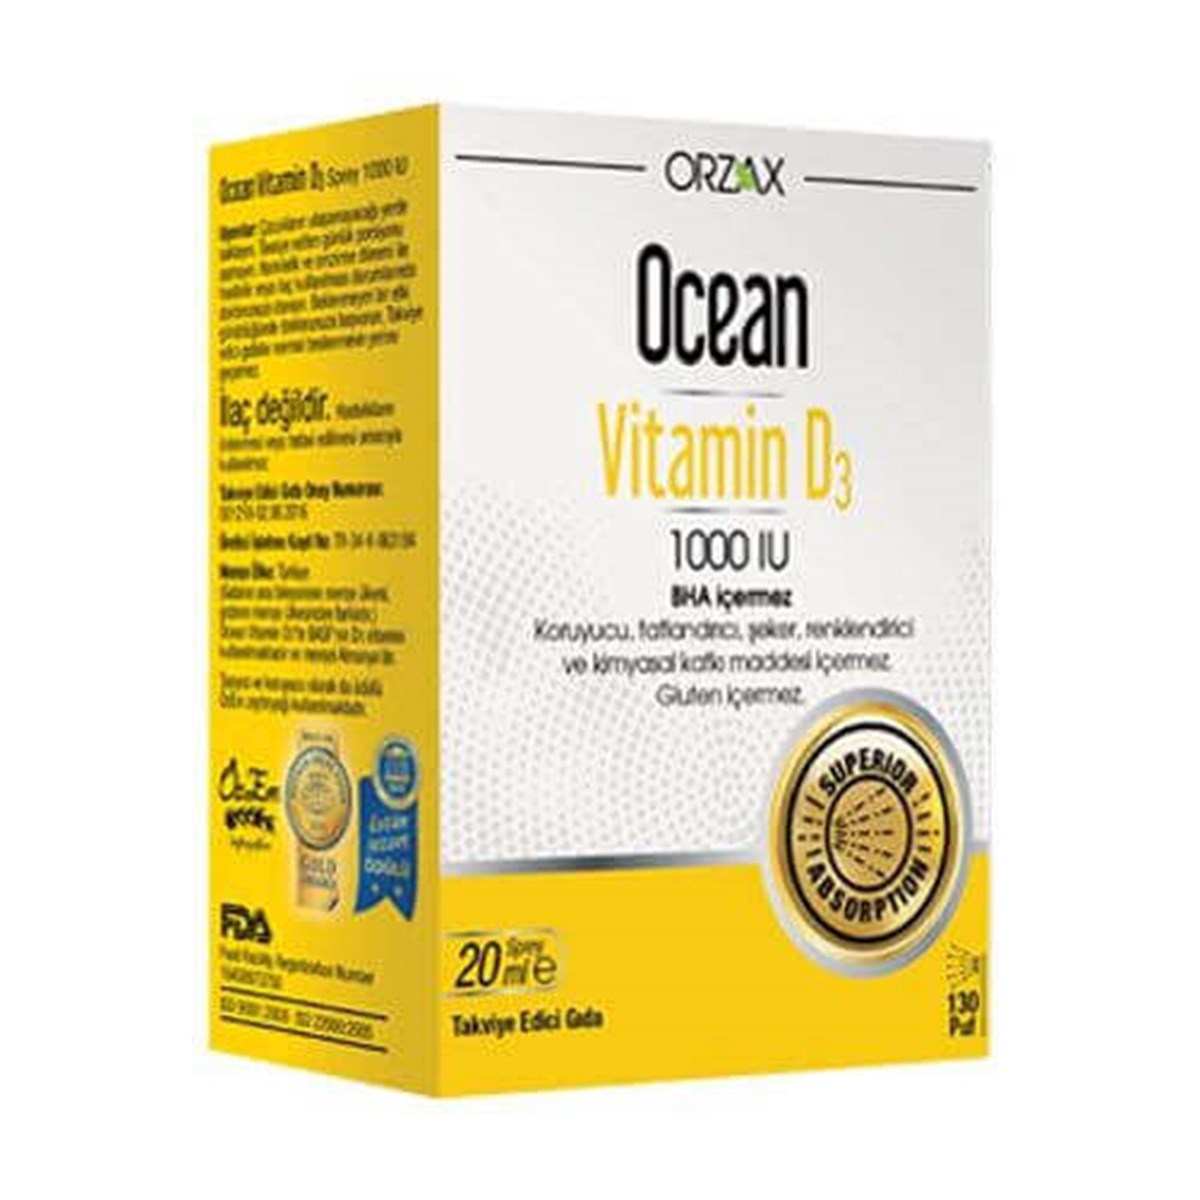 Ocean Vitamin D3 1000 IU Oral Sprey 20 ml Fiyatları